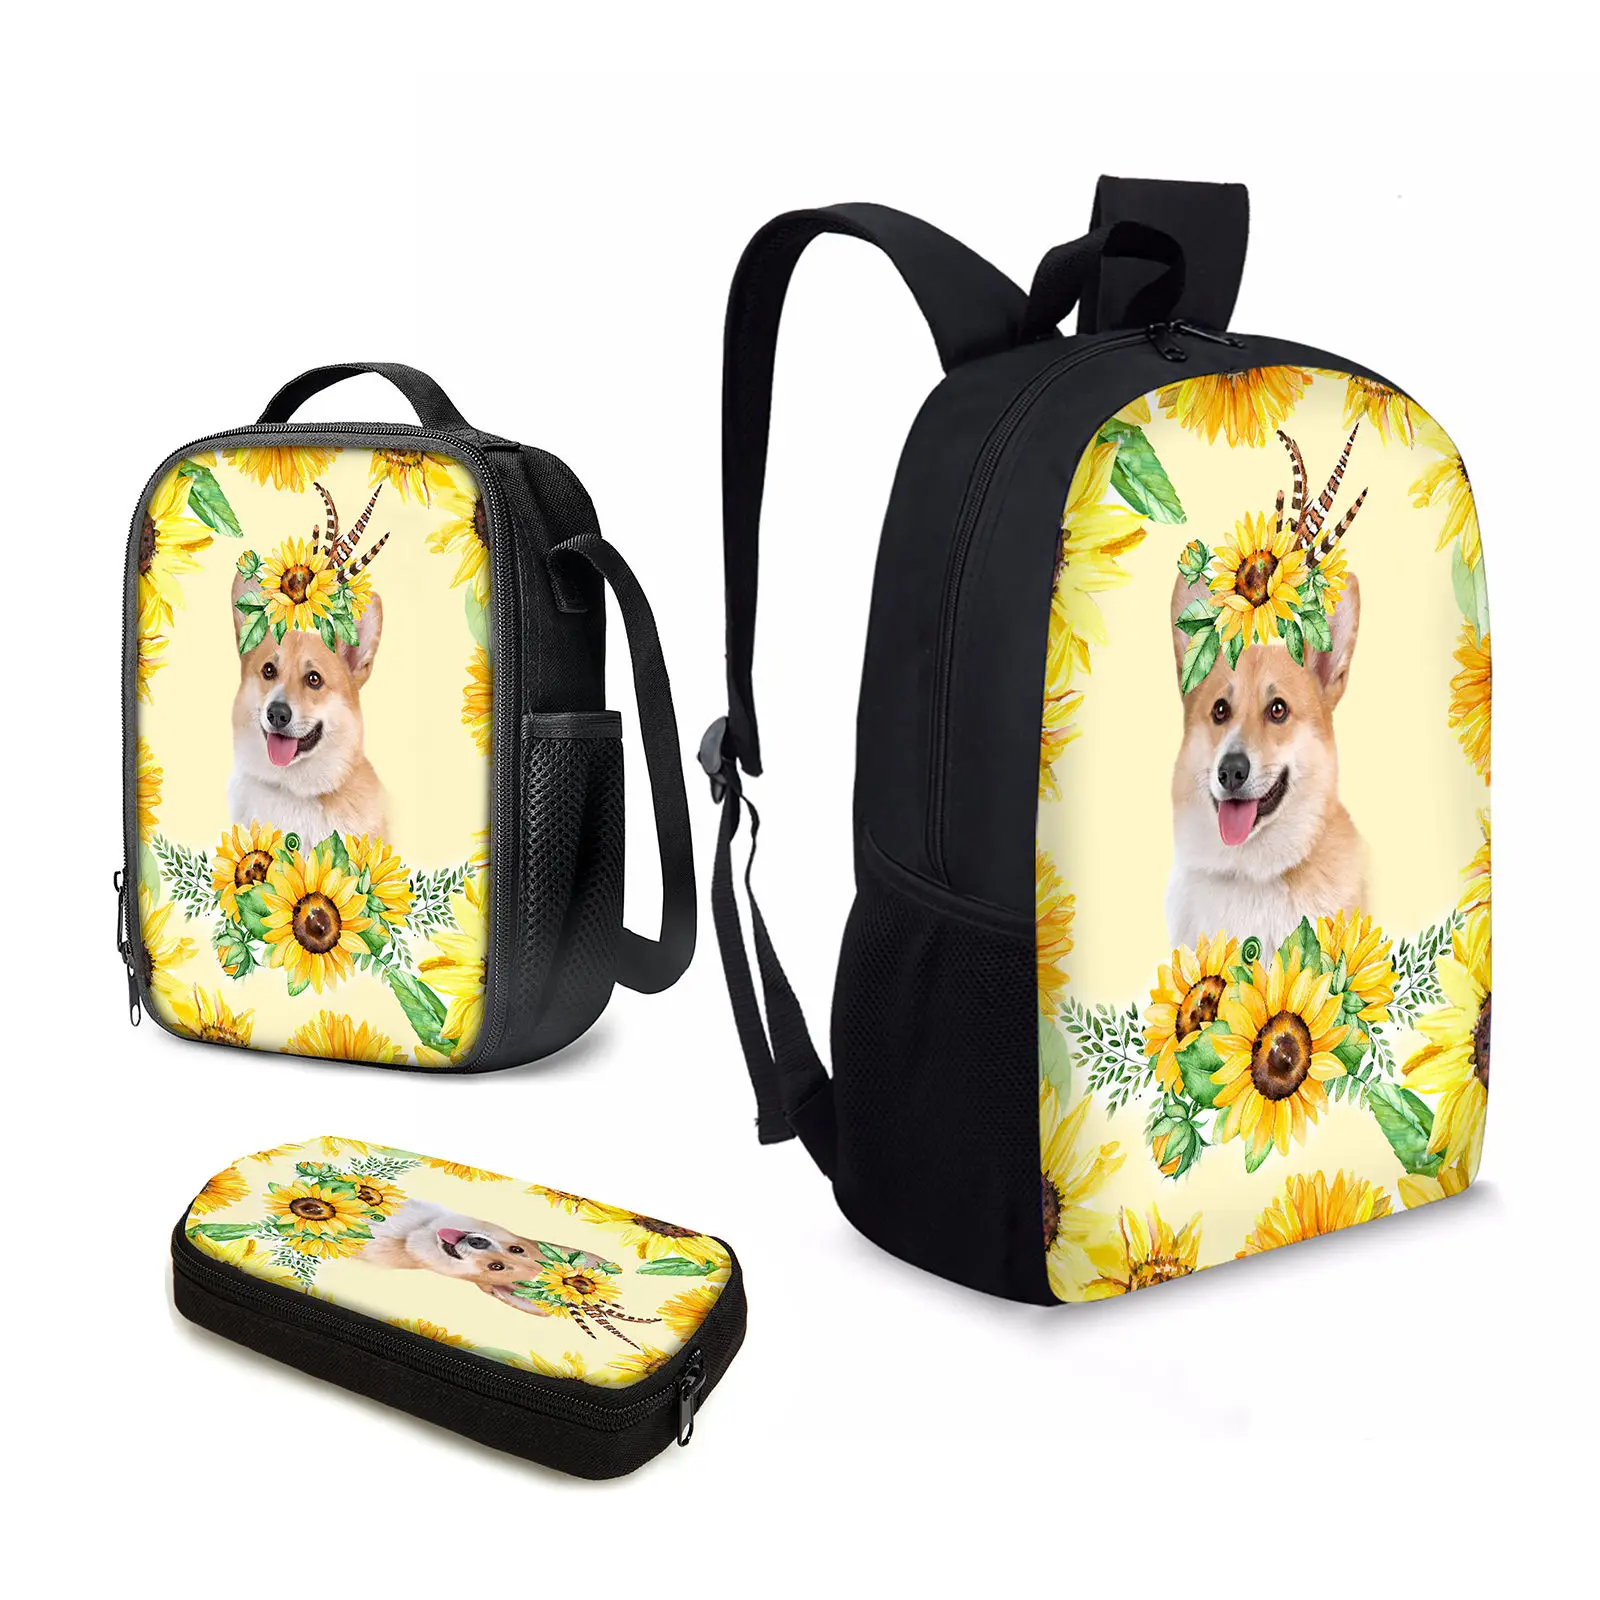 

YIKELUO Cute Corgi/Golden Retriever Design Back To School Gifts For Kids 3PCS Sunflower Pet Dog Print Notebook Bag Lunch Bag